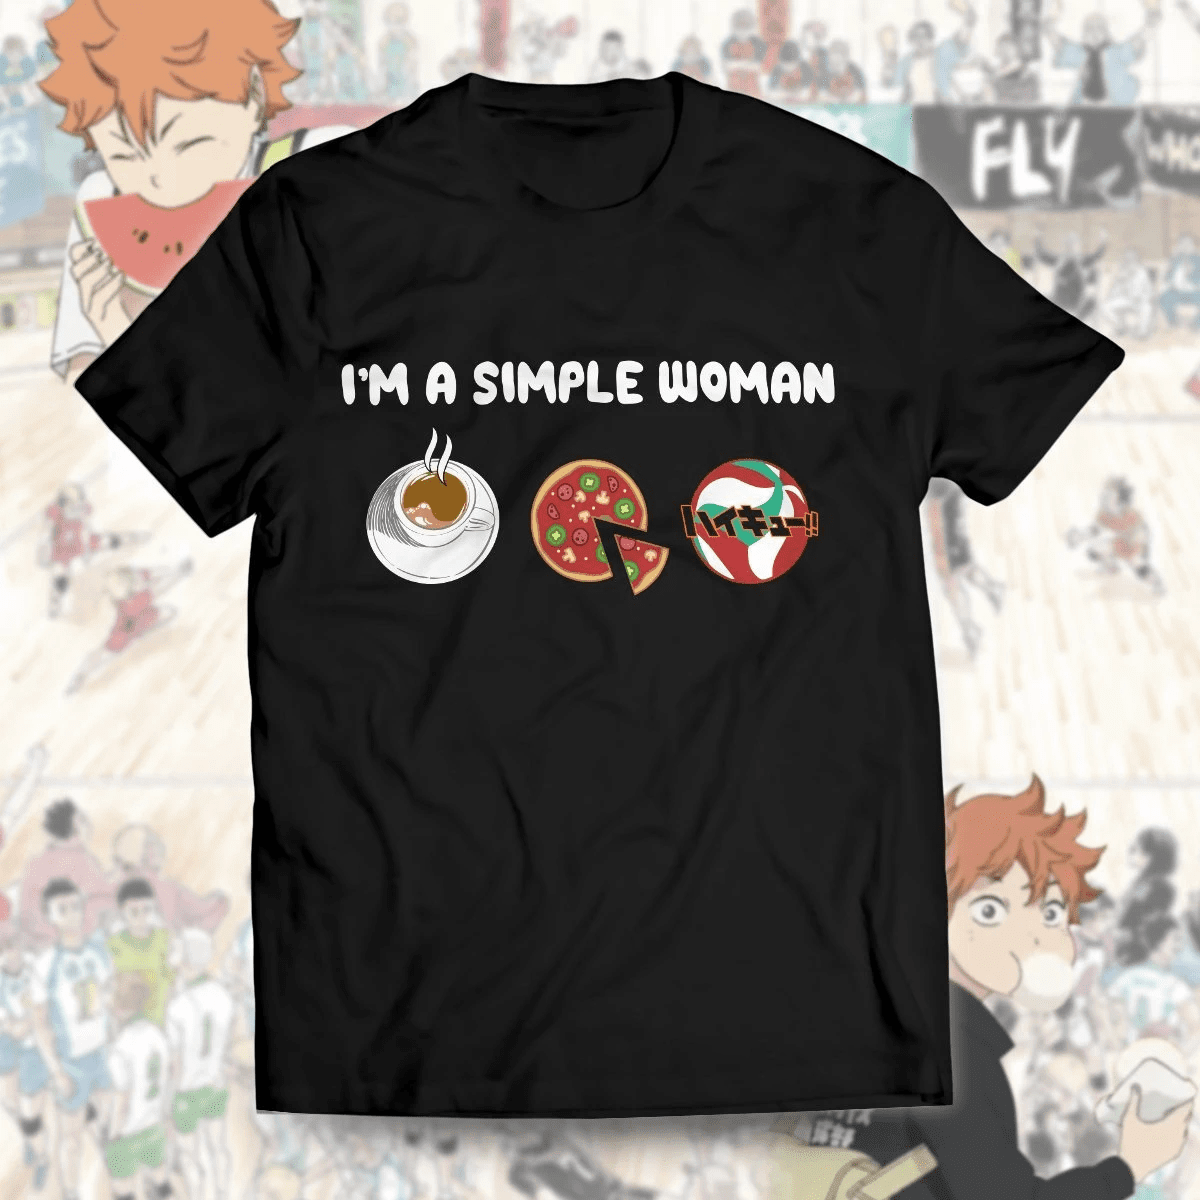 I'm a Simple Woman Unisex T-Shirt